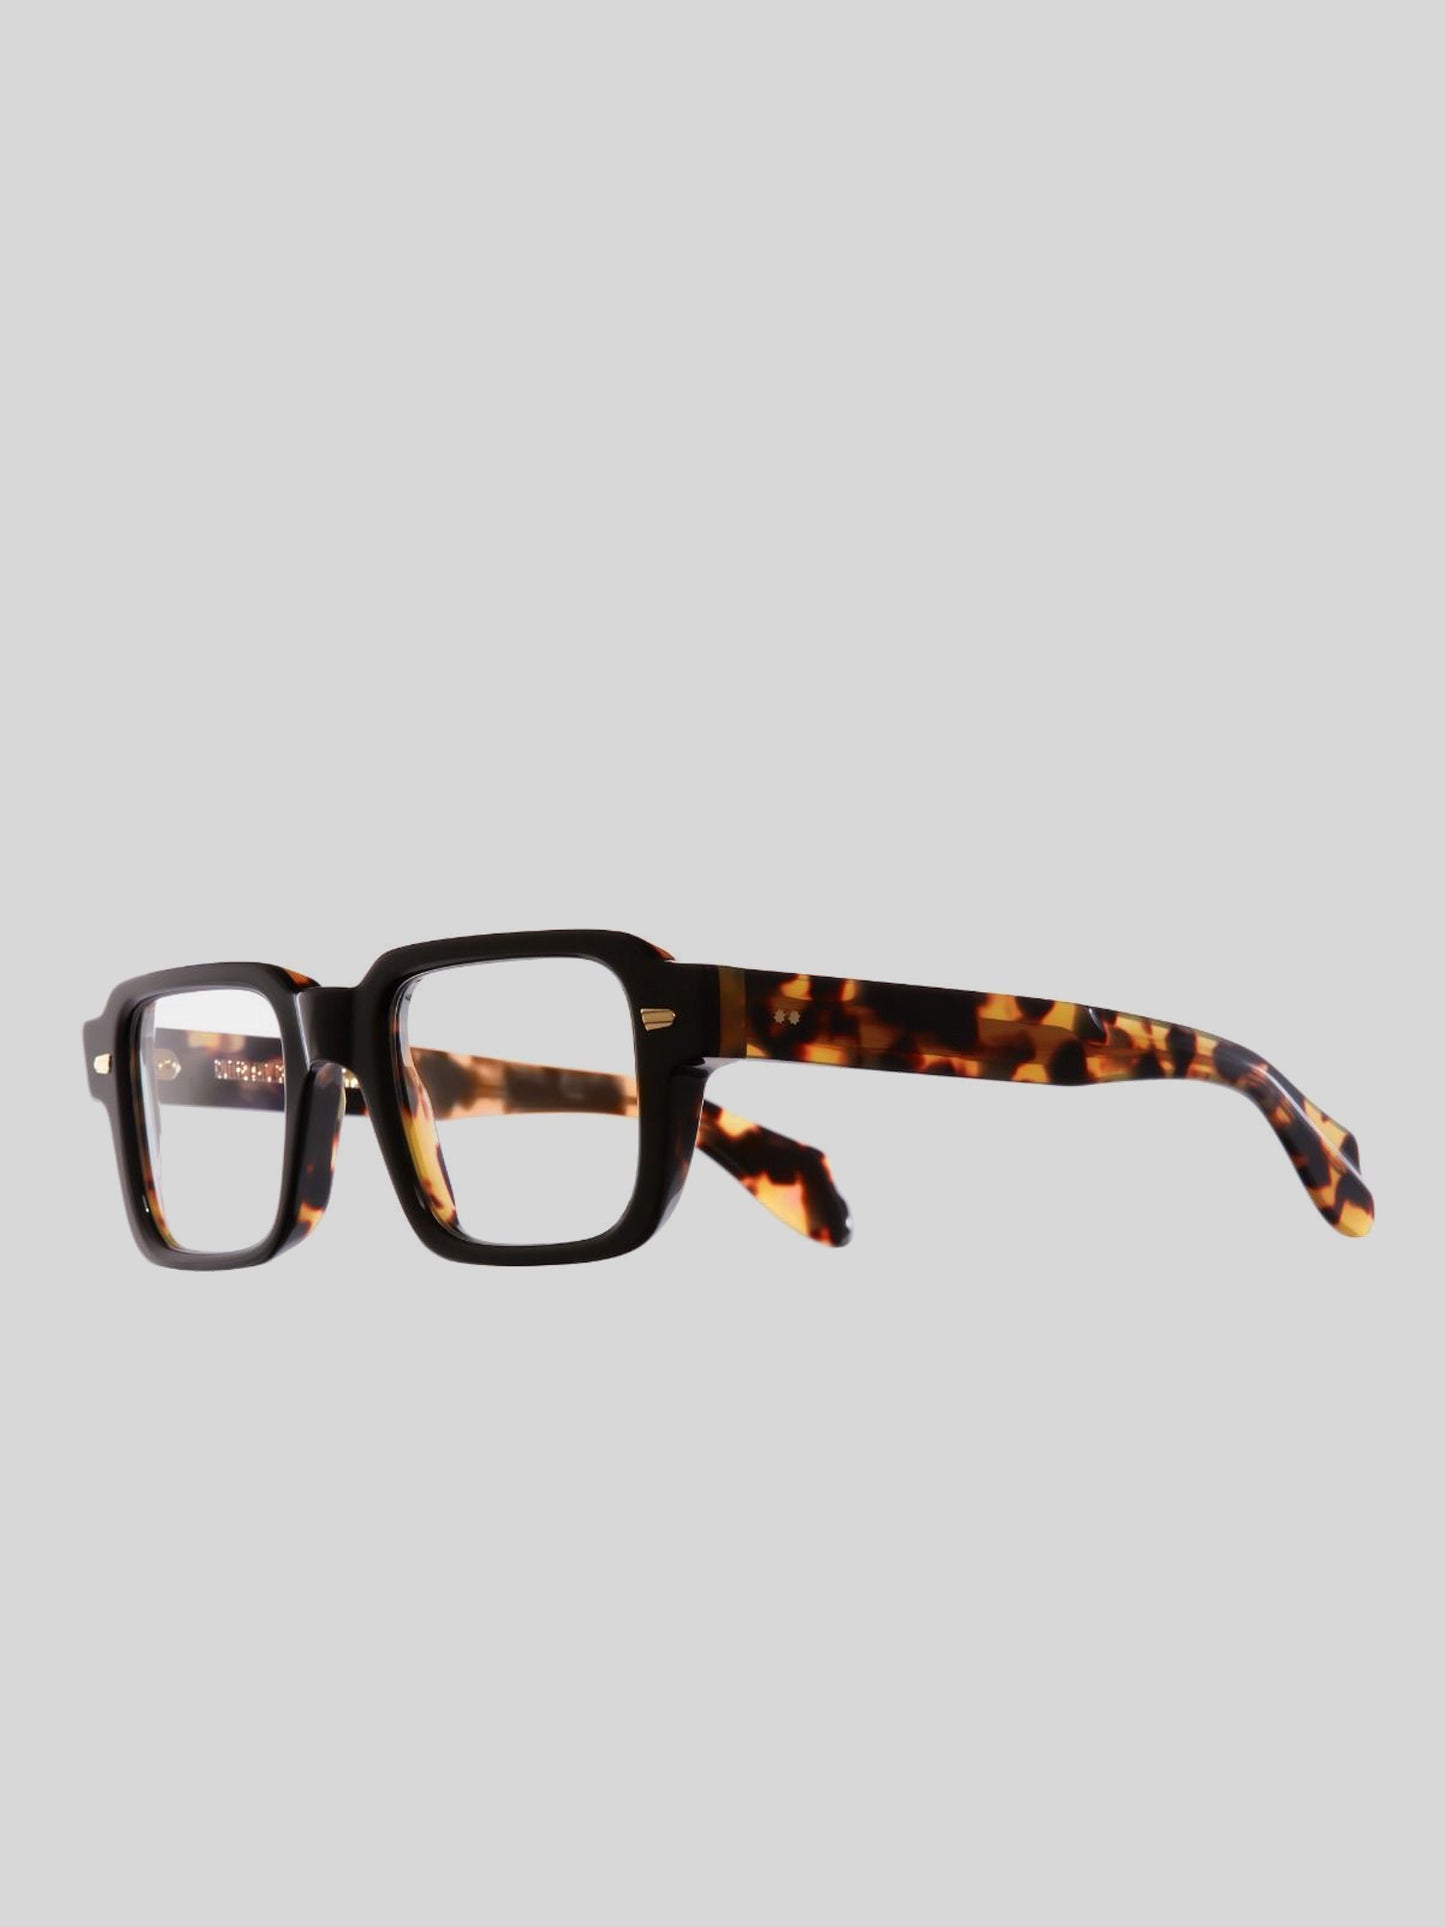 Optical Square Glasses, Black on Camo